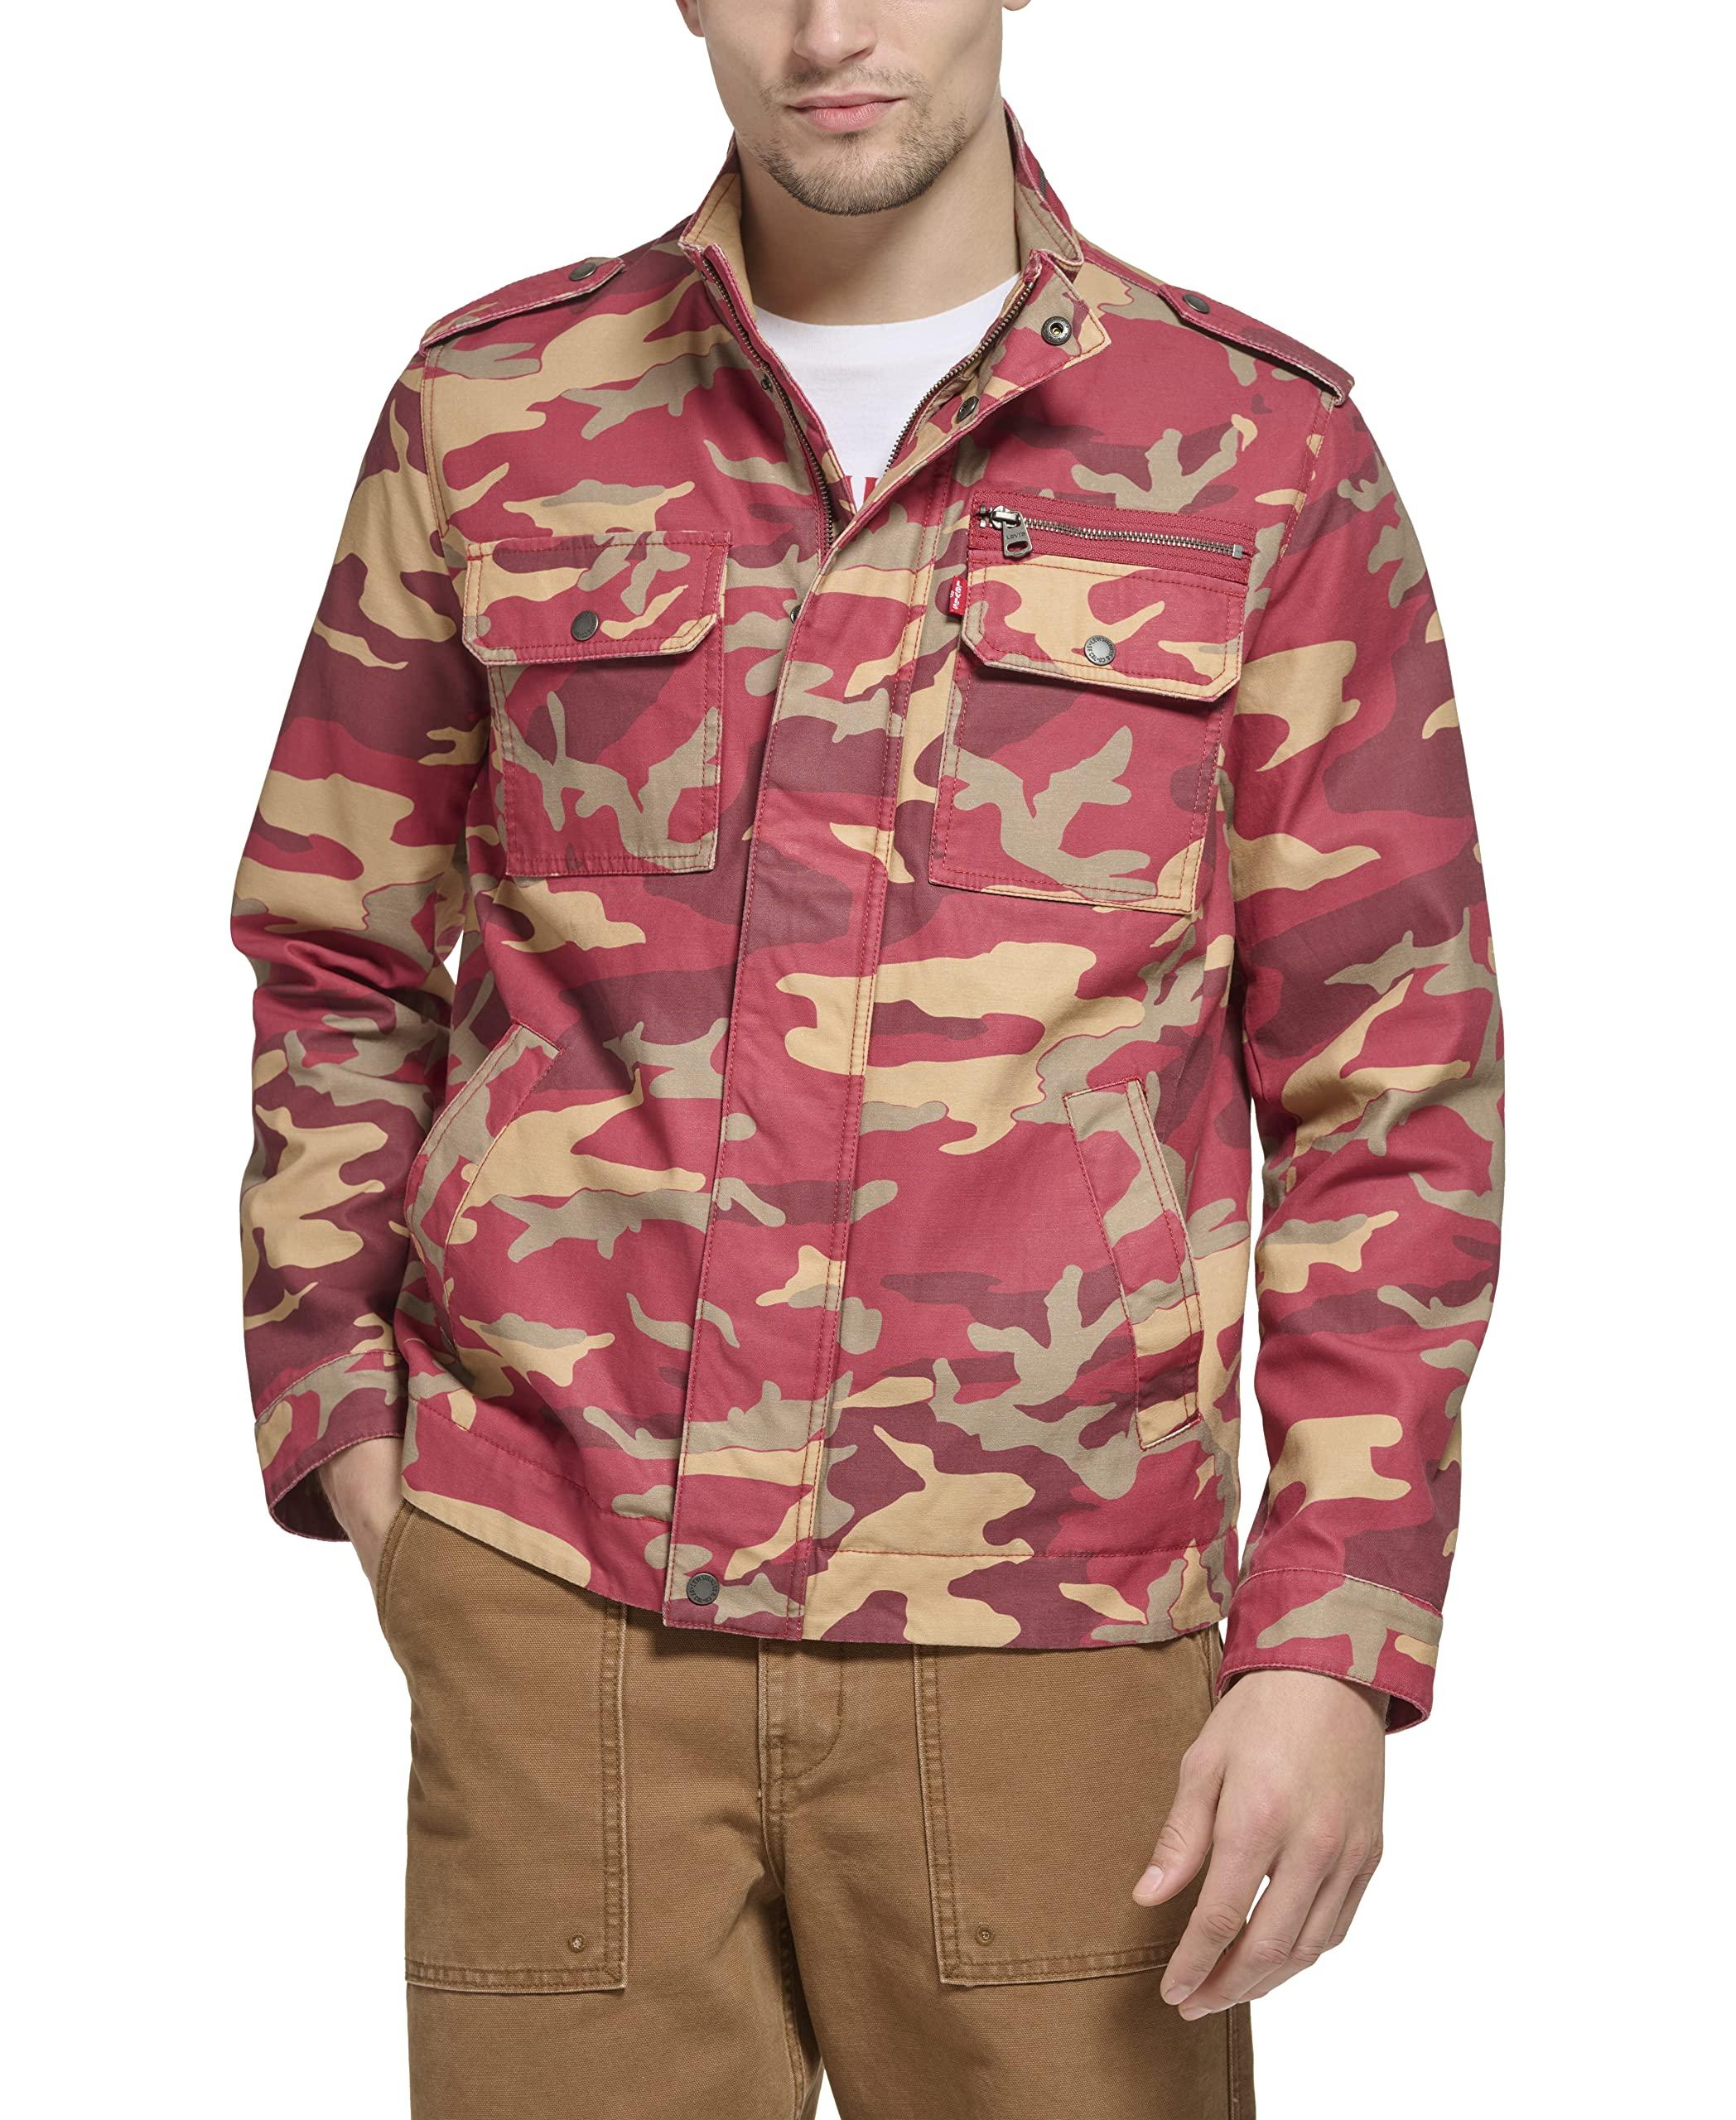 Levi's Men's Washed Cotton Military Jacket